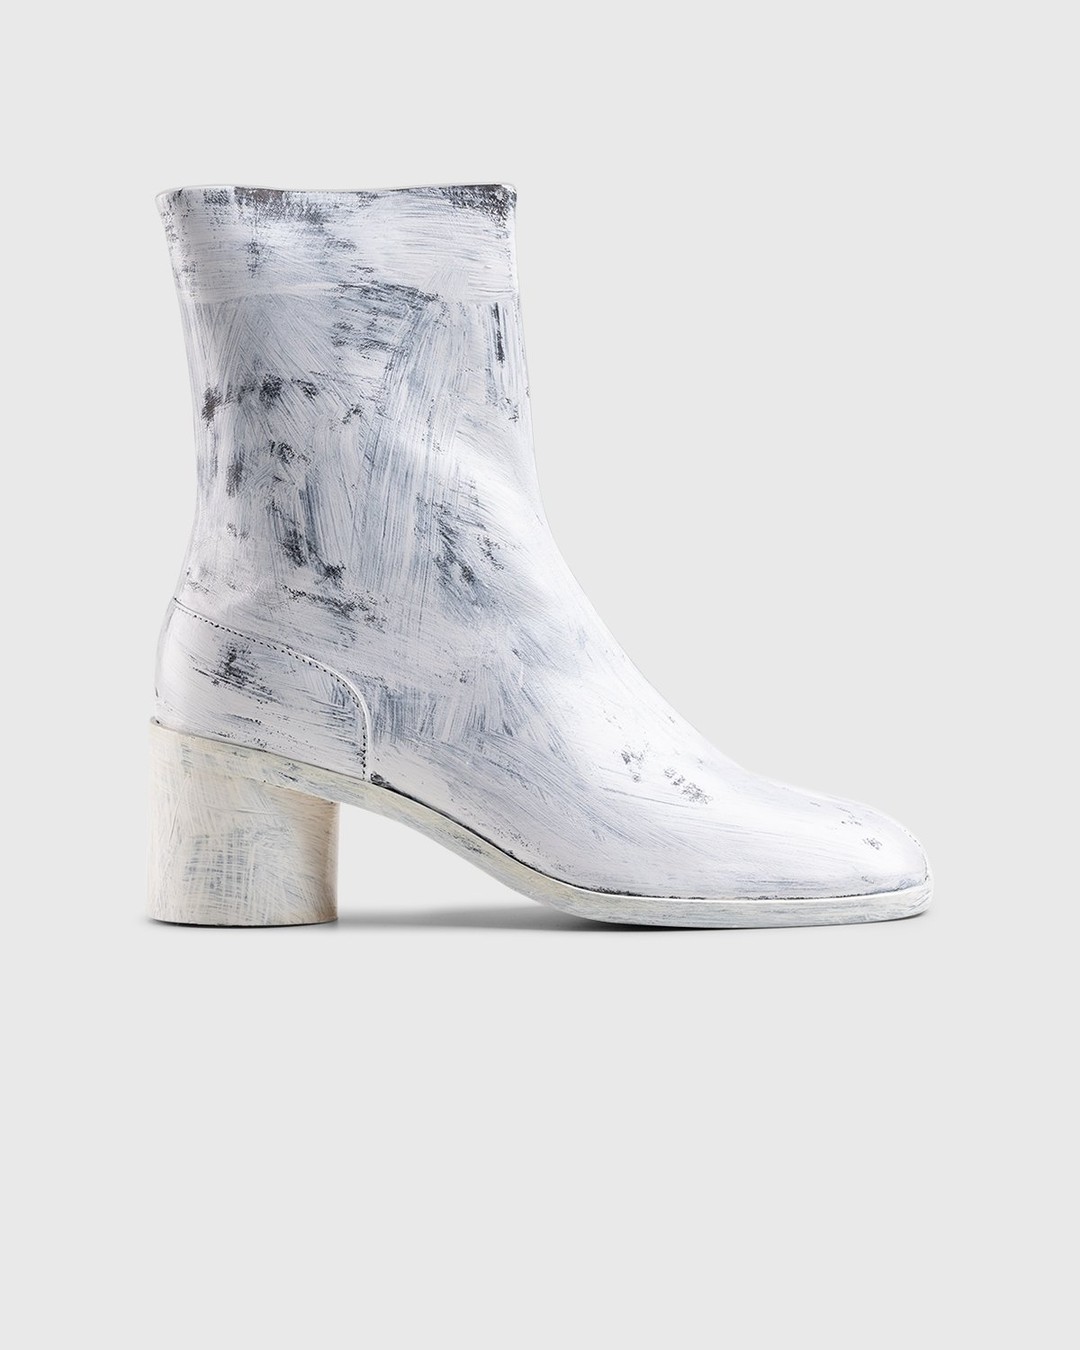 Maison Margiela – Tabi Bianchetto Chelsea Boots White - Heels - White - Image 1